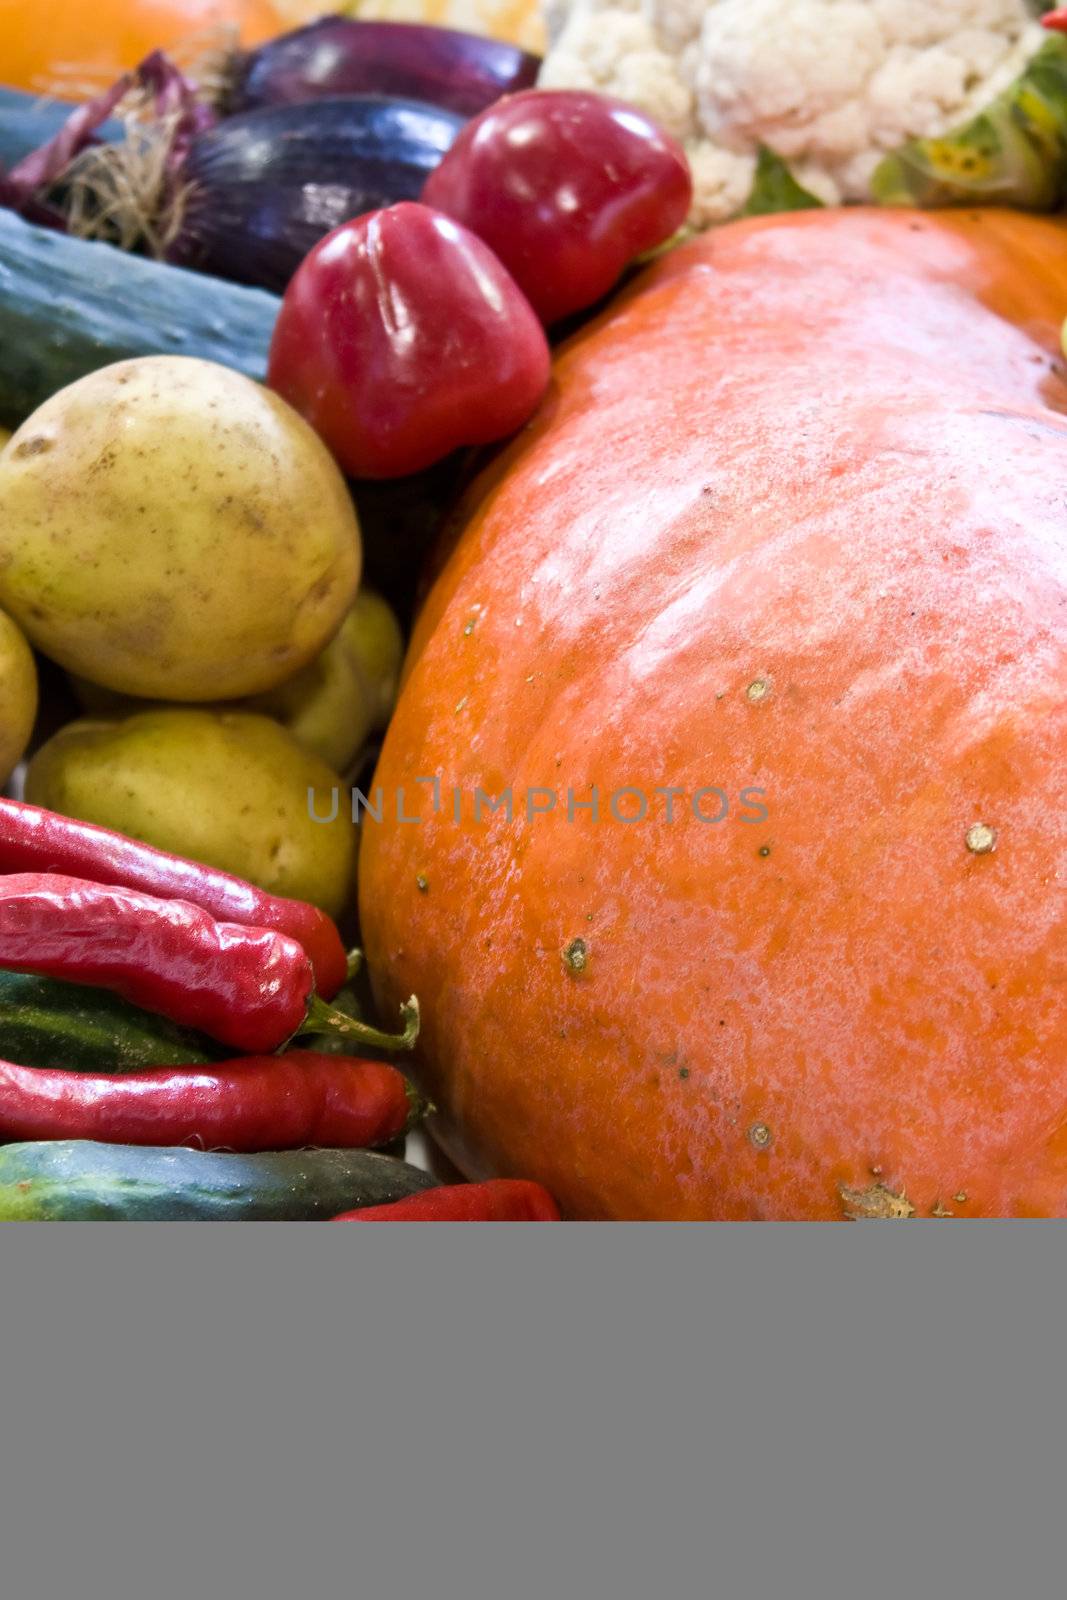 Wheelbarrow full of fall vegetables bright colors